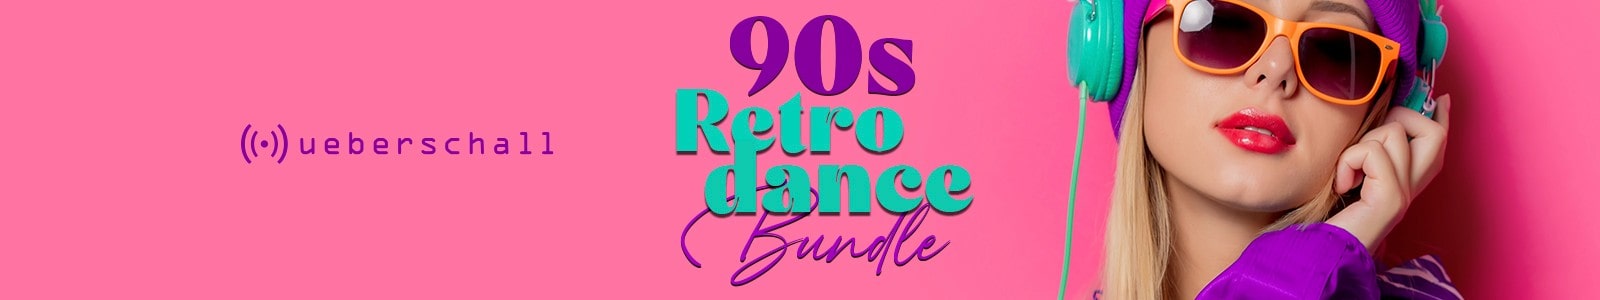 90s retro dance bundle